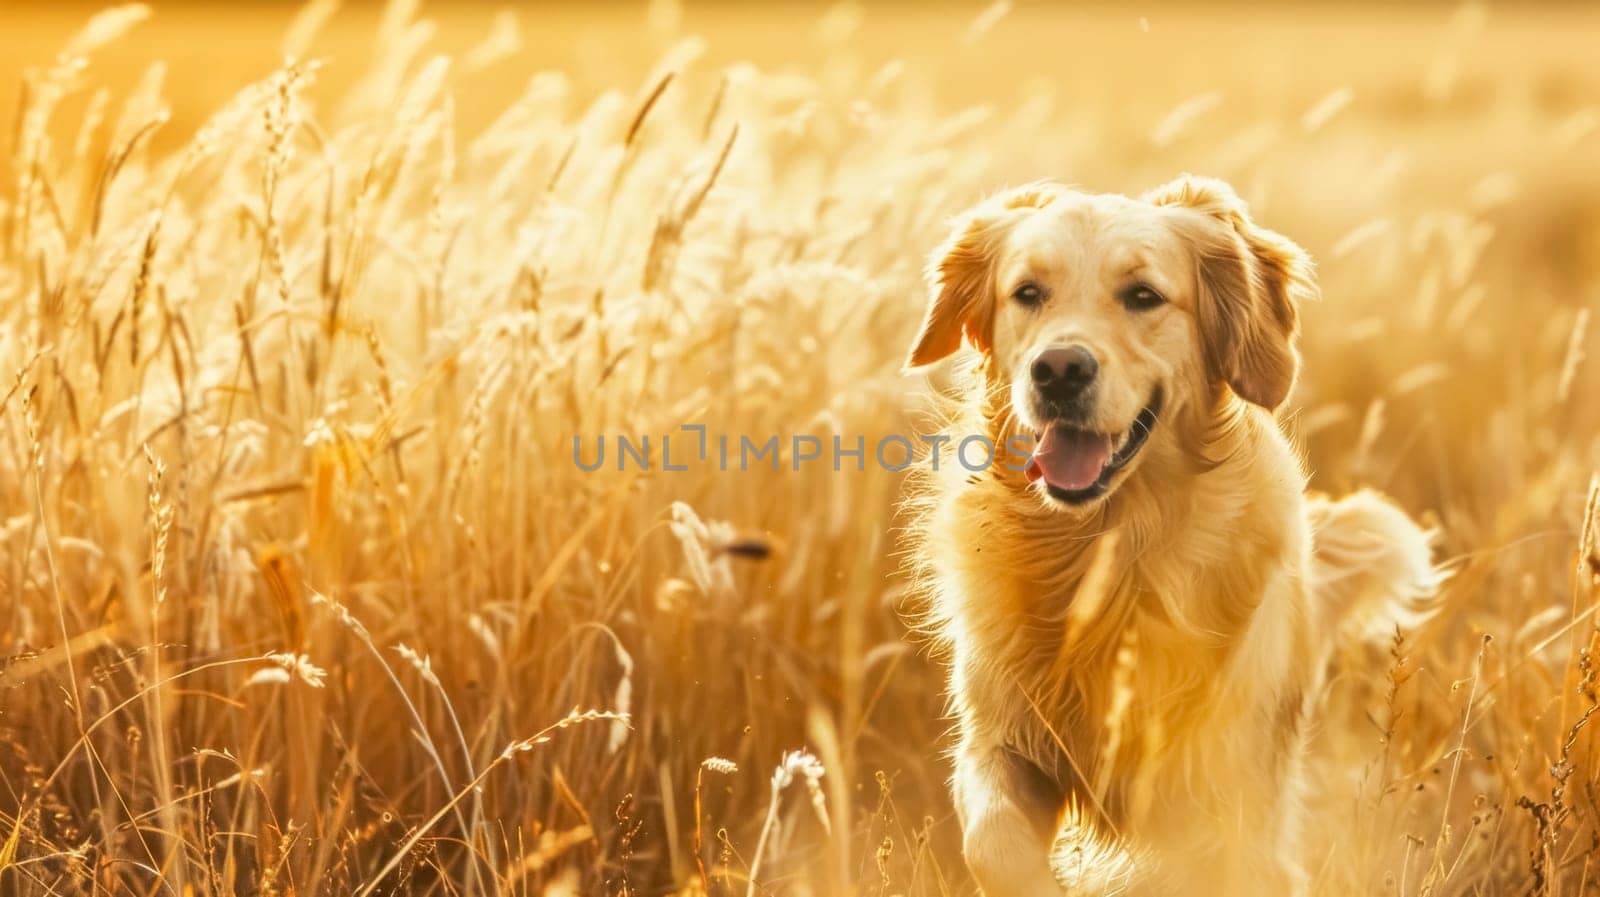 A happy golden retriever dog amidst a golden wheat field at sunset